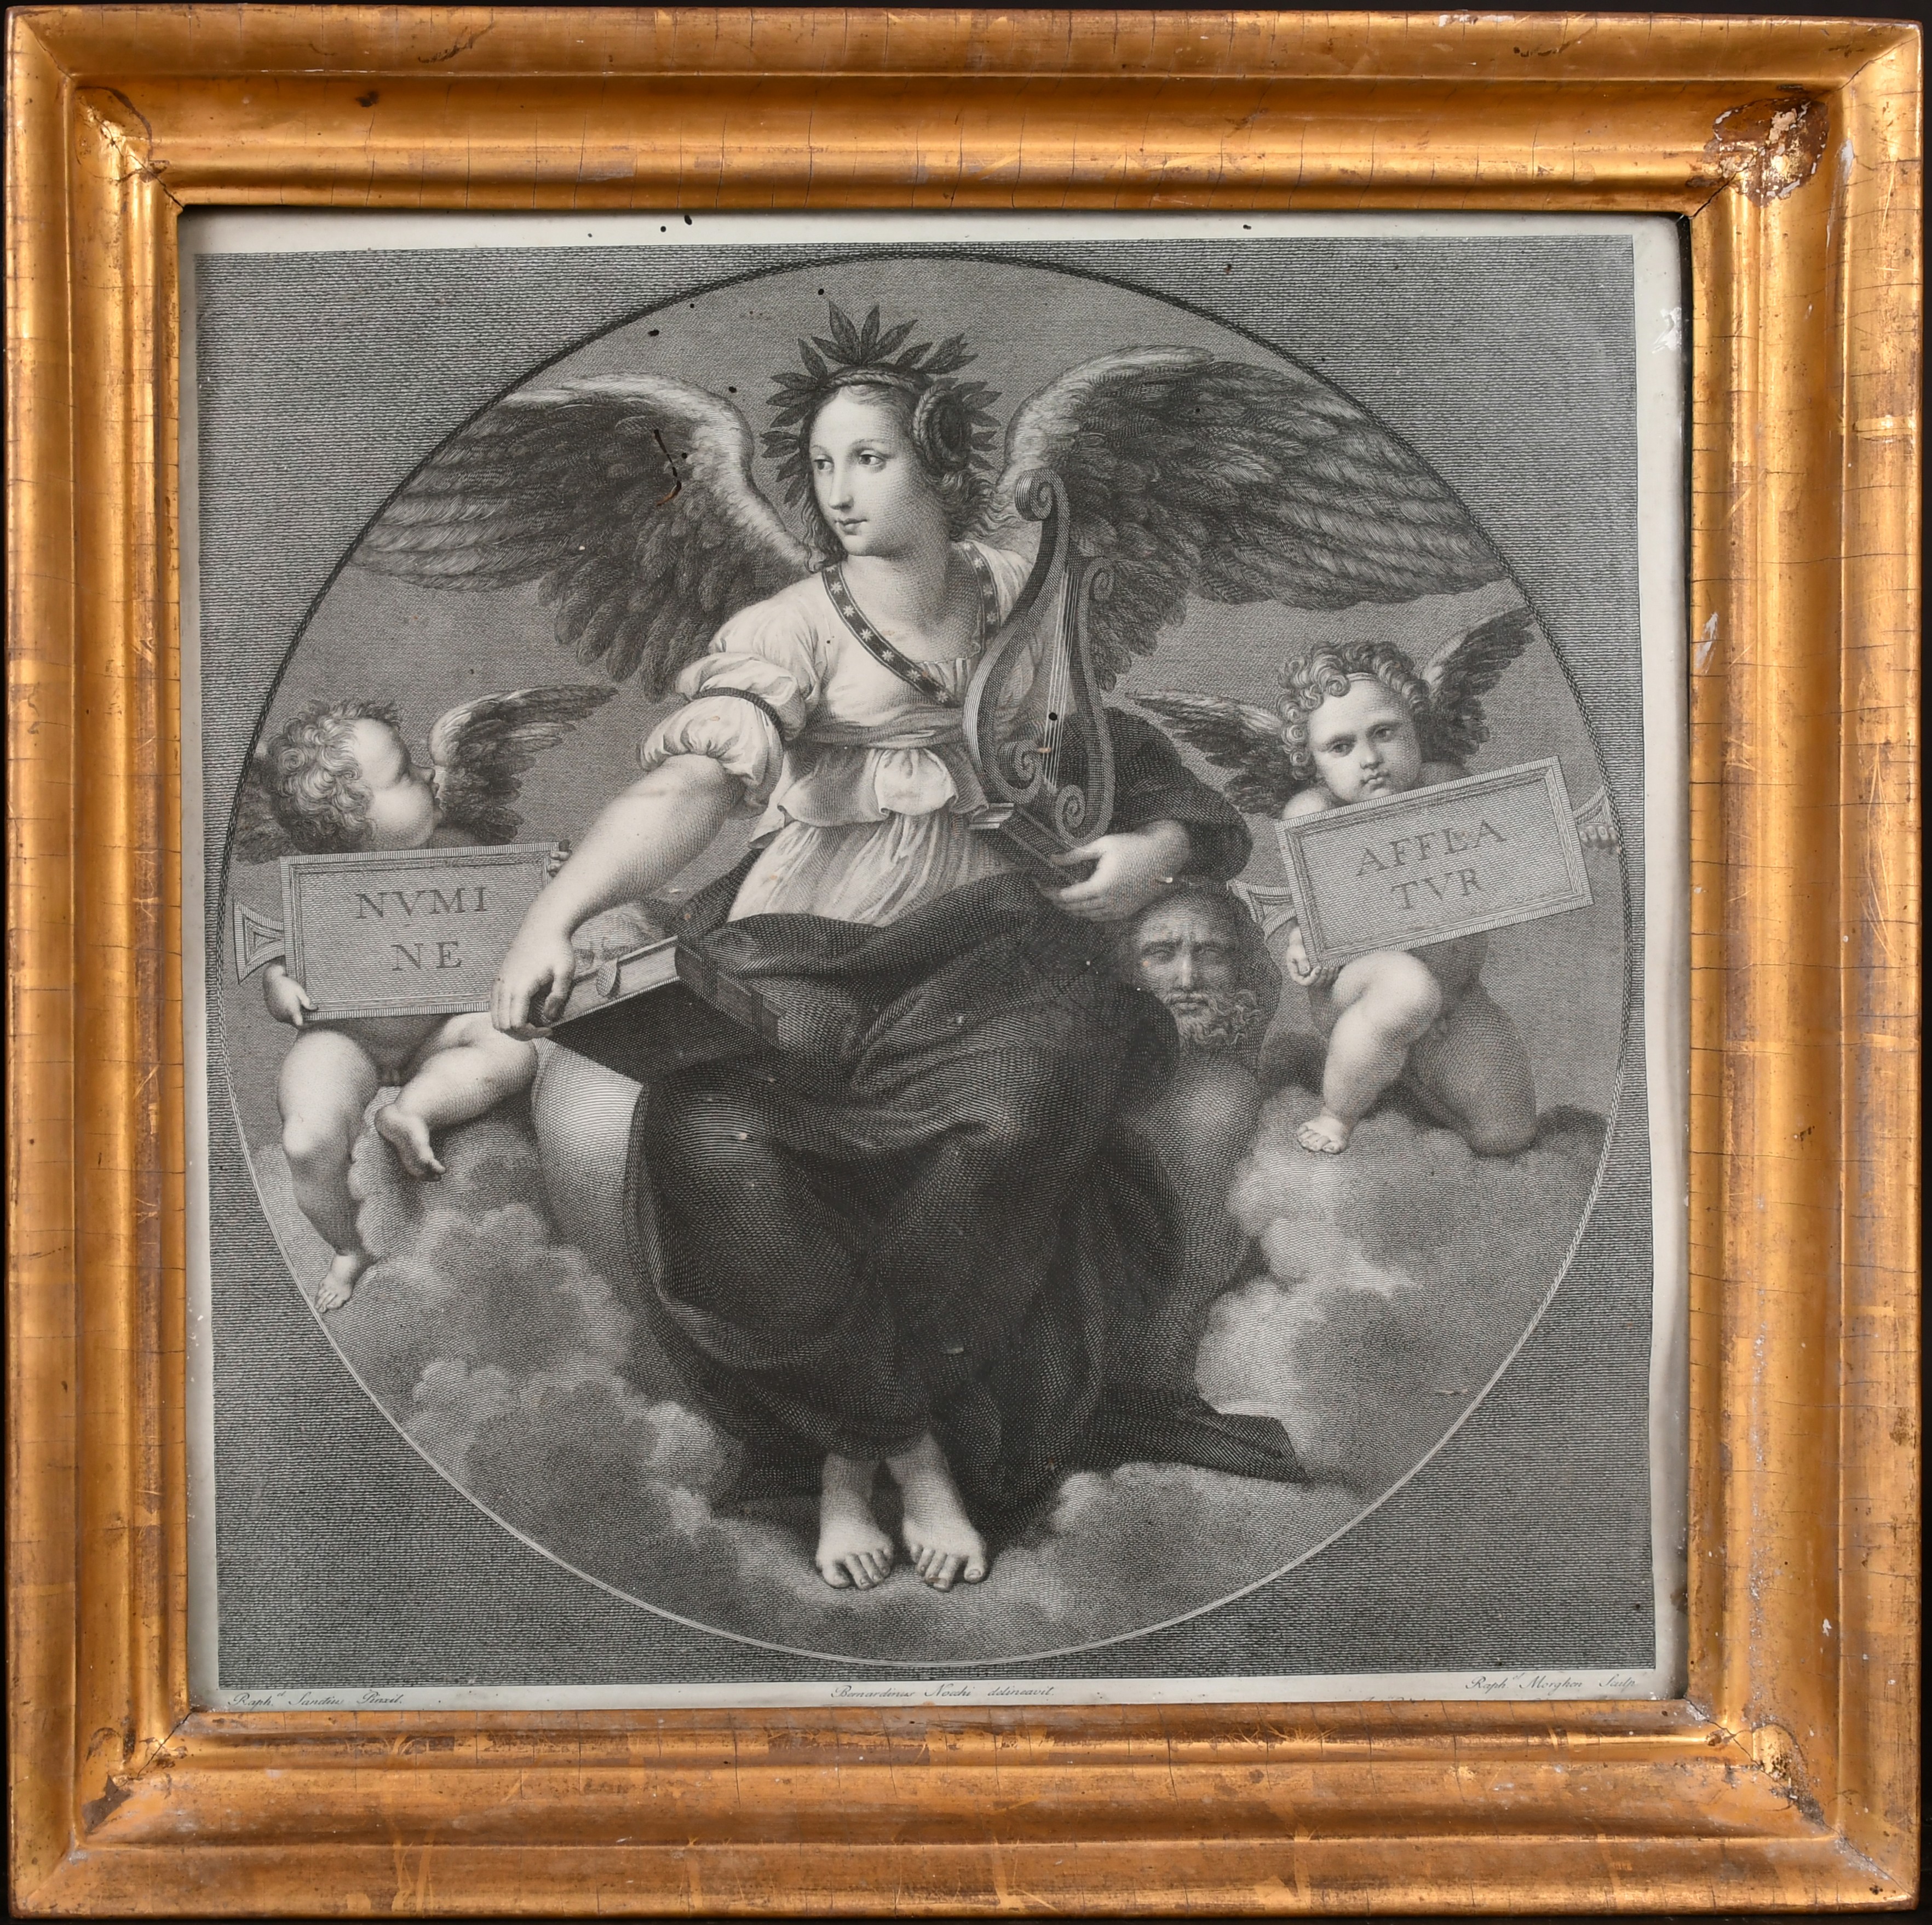 After Raffaello Sanzio ‘Raphael’ (1483-1520) Italian. “Poesis”, Engraving, 14” x 14” (35.5 x 35.5cm) - Image 2 of 4